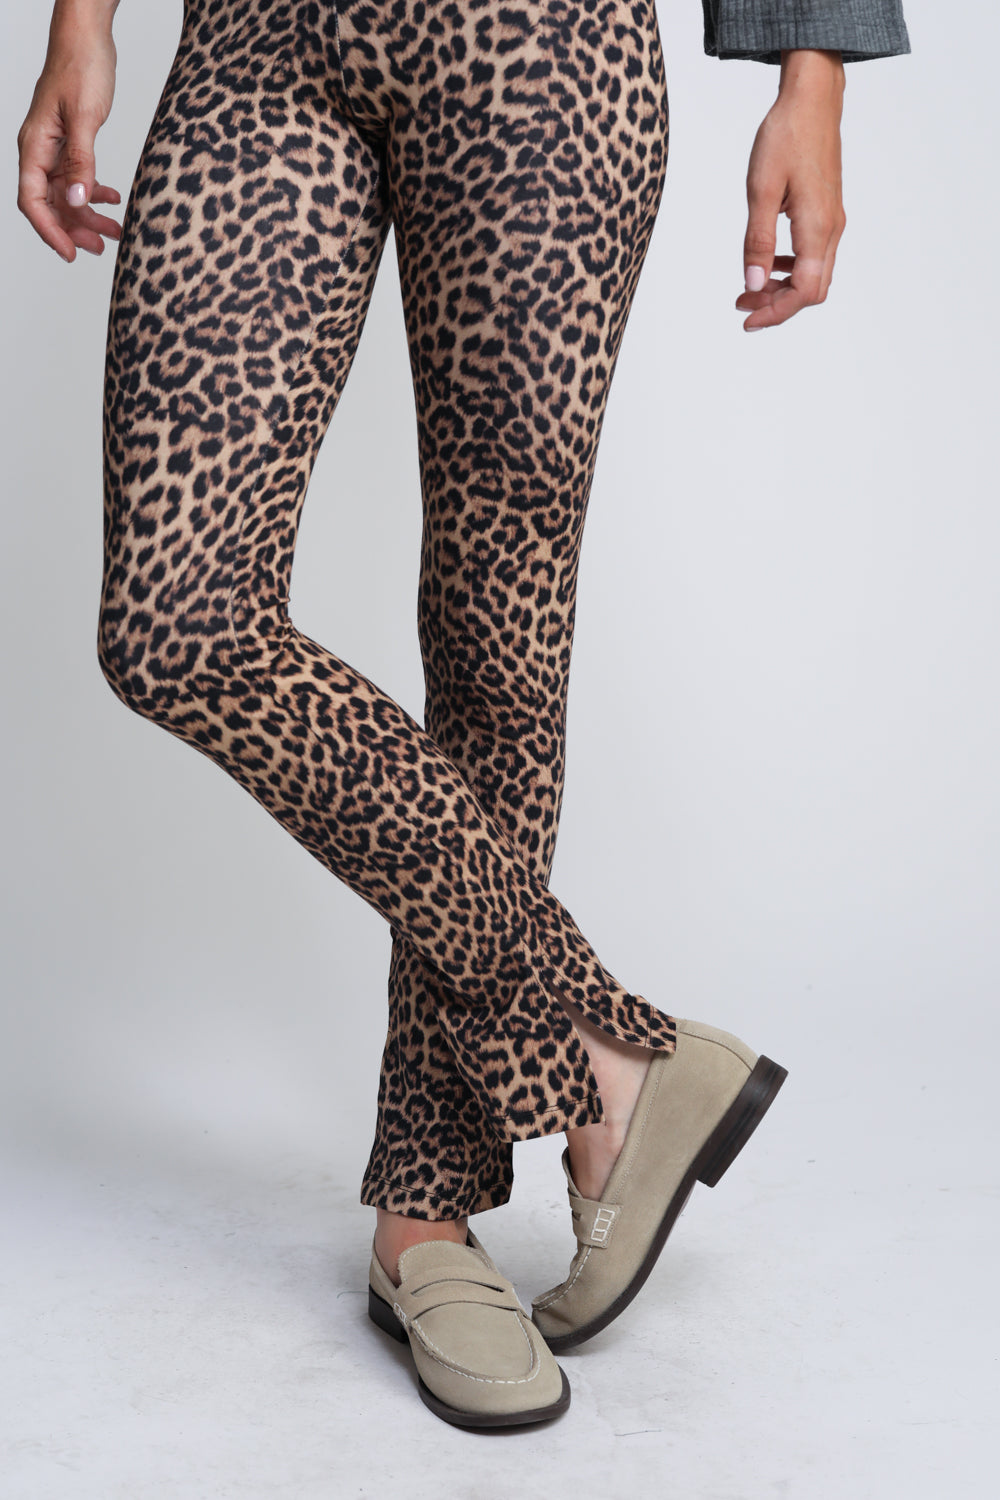 Chosen Leopard Split Leggings